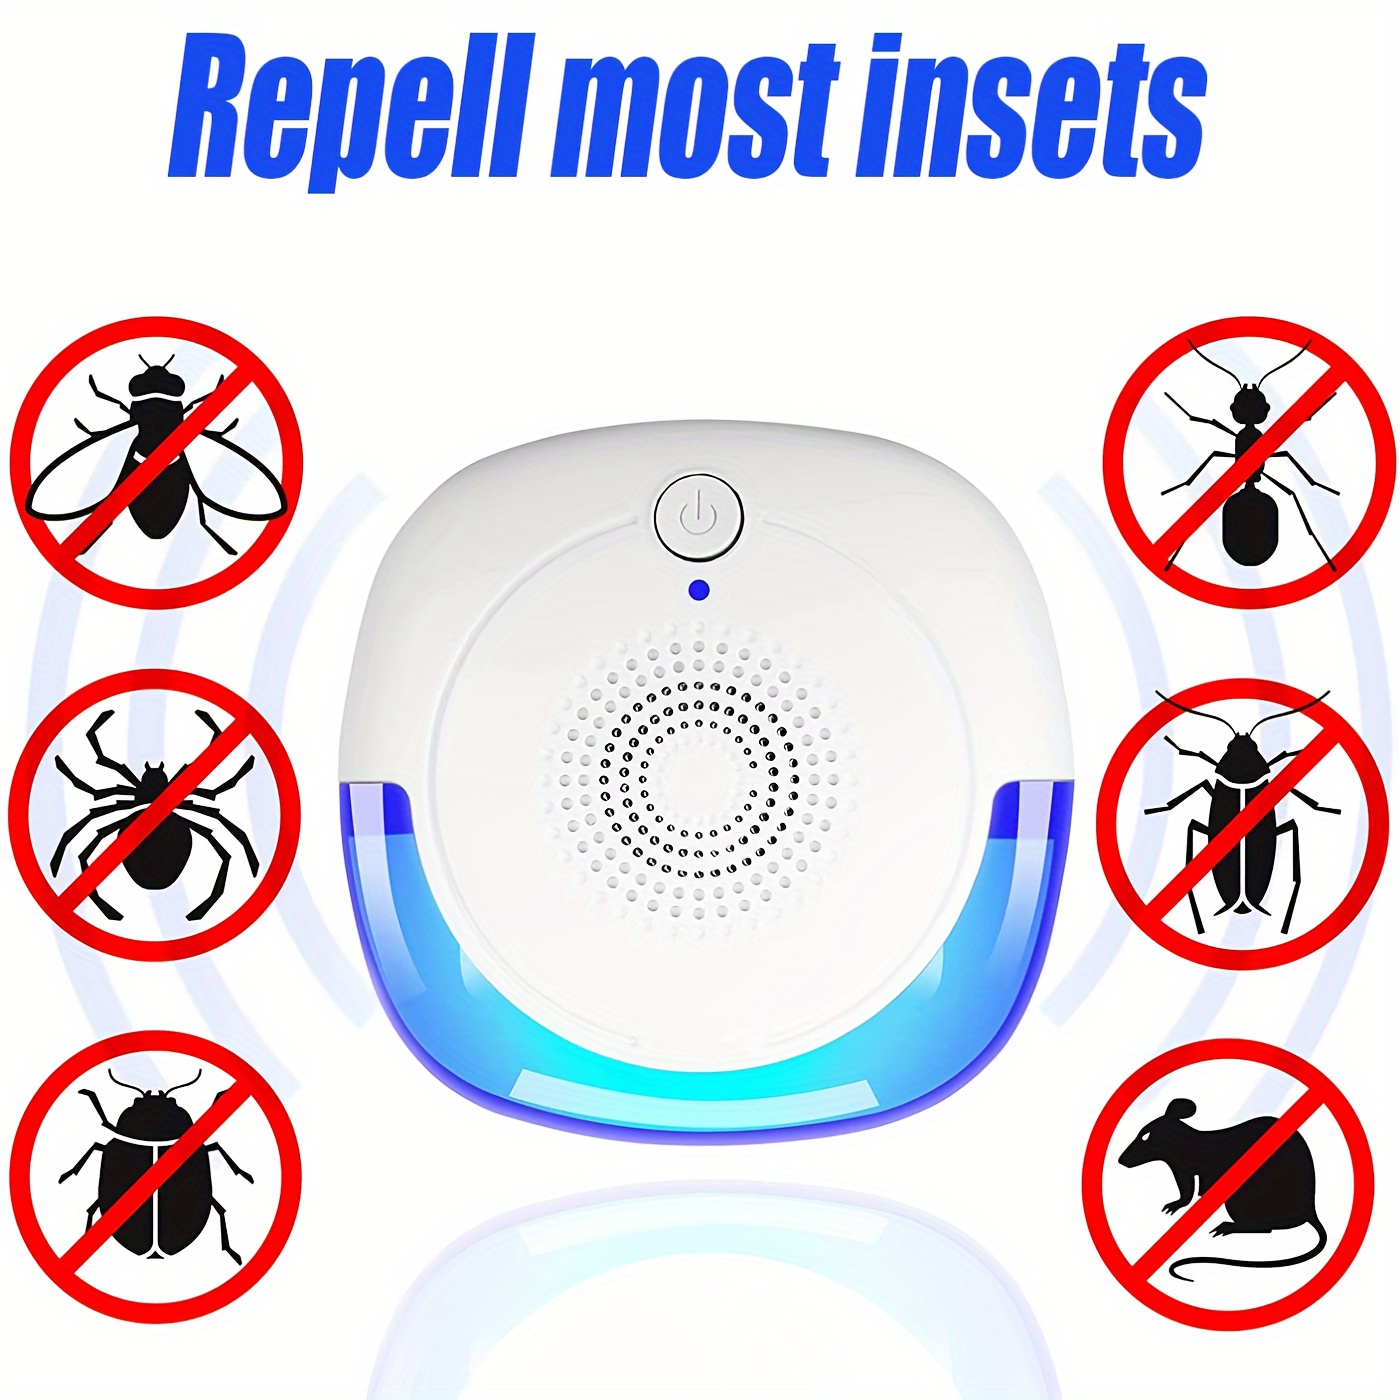 Ultrasonic Pest Repeller Effective Indoor Pest Control For - Temu